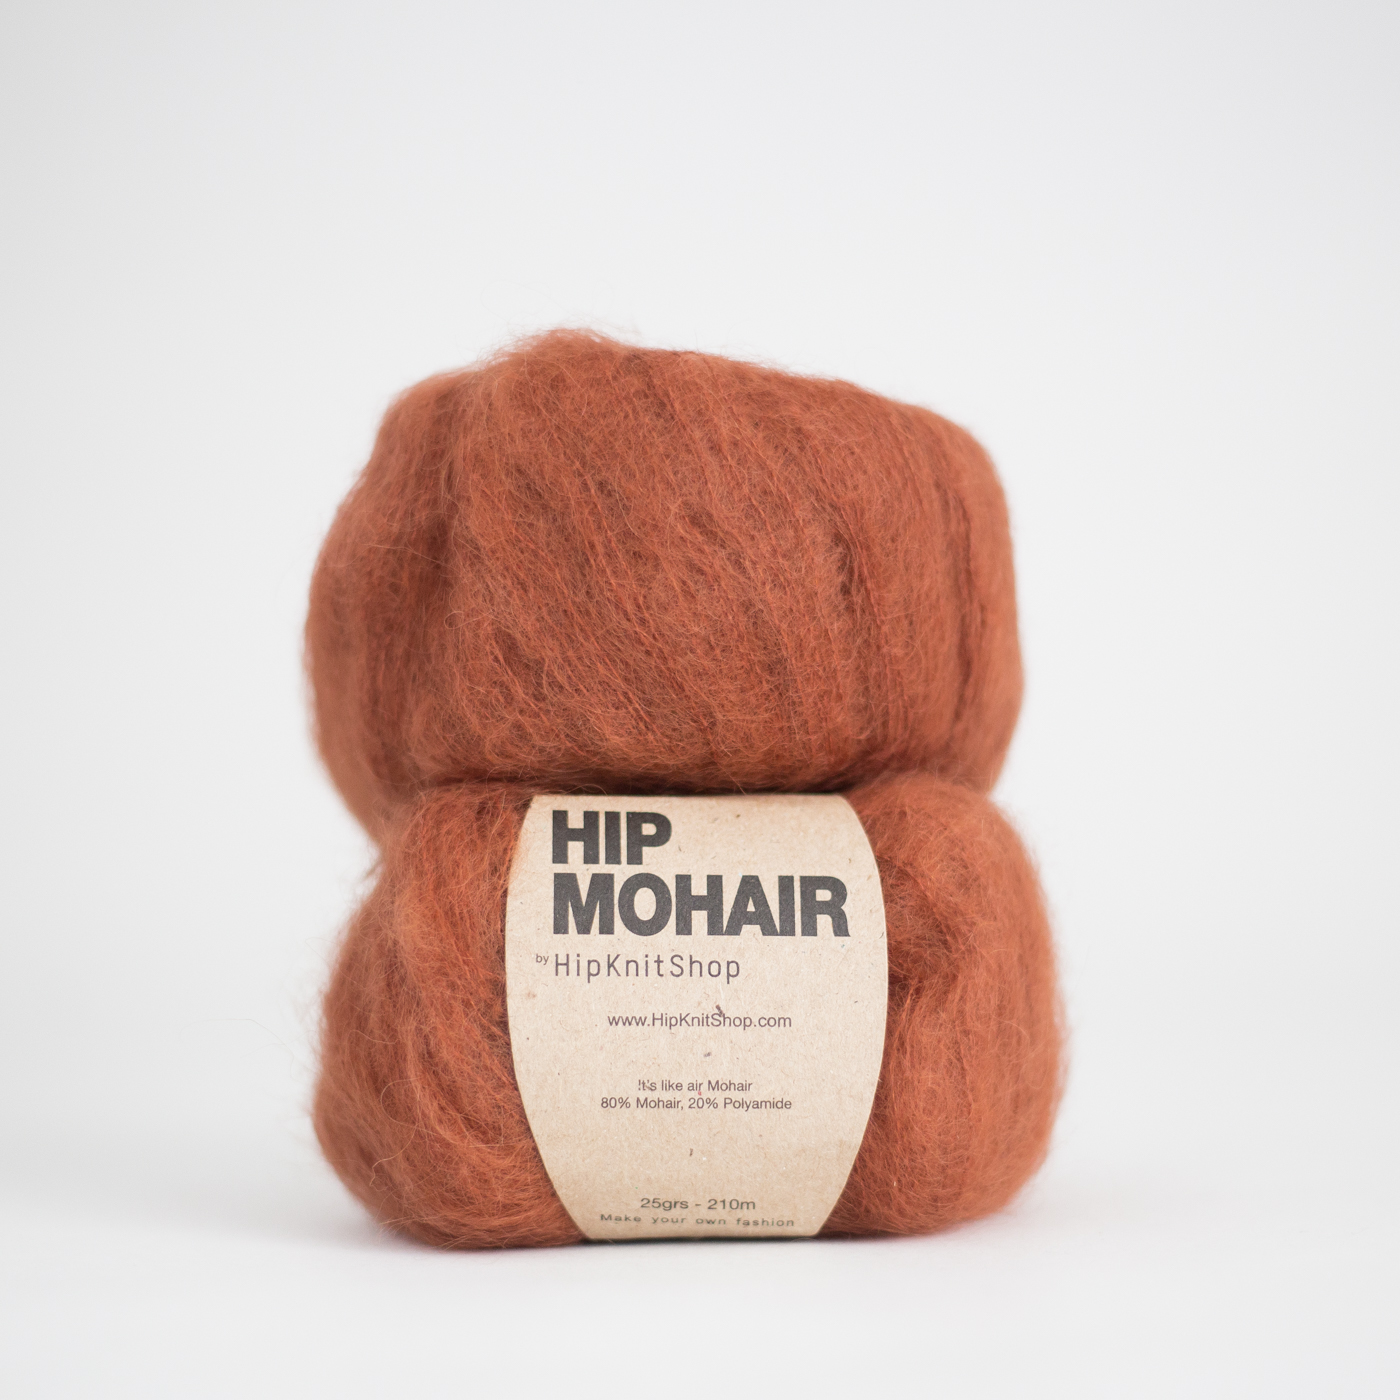  - Chestnut brown mohair | Mohair Yarn - by HipKnitShop - 31/05/2018